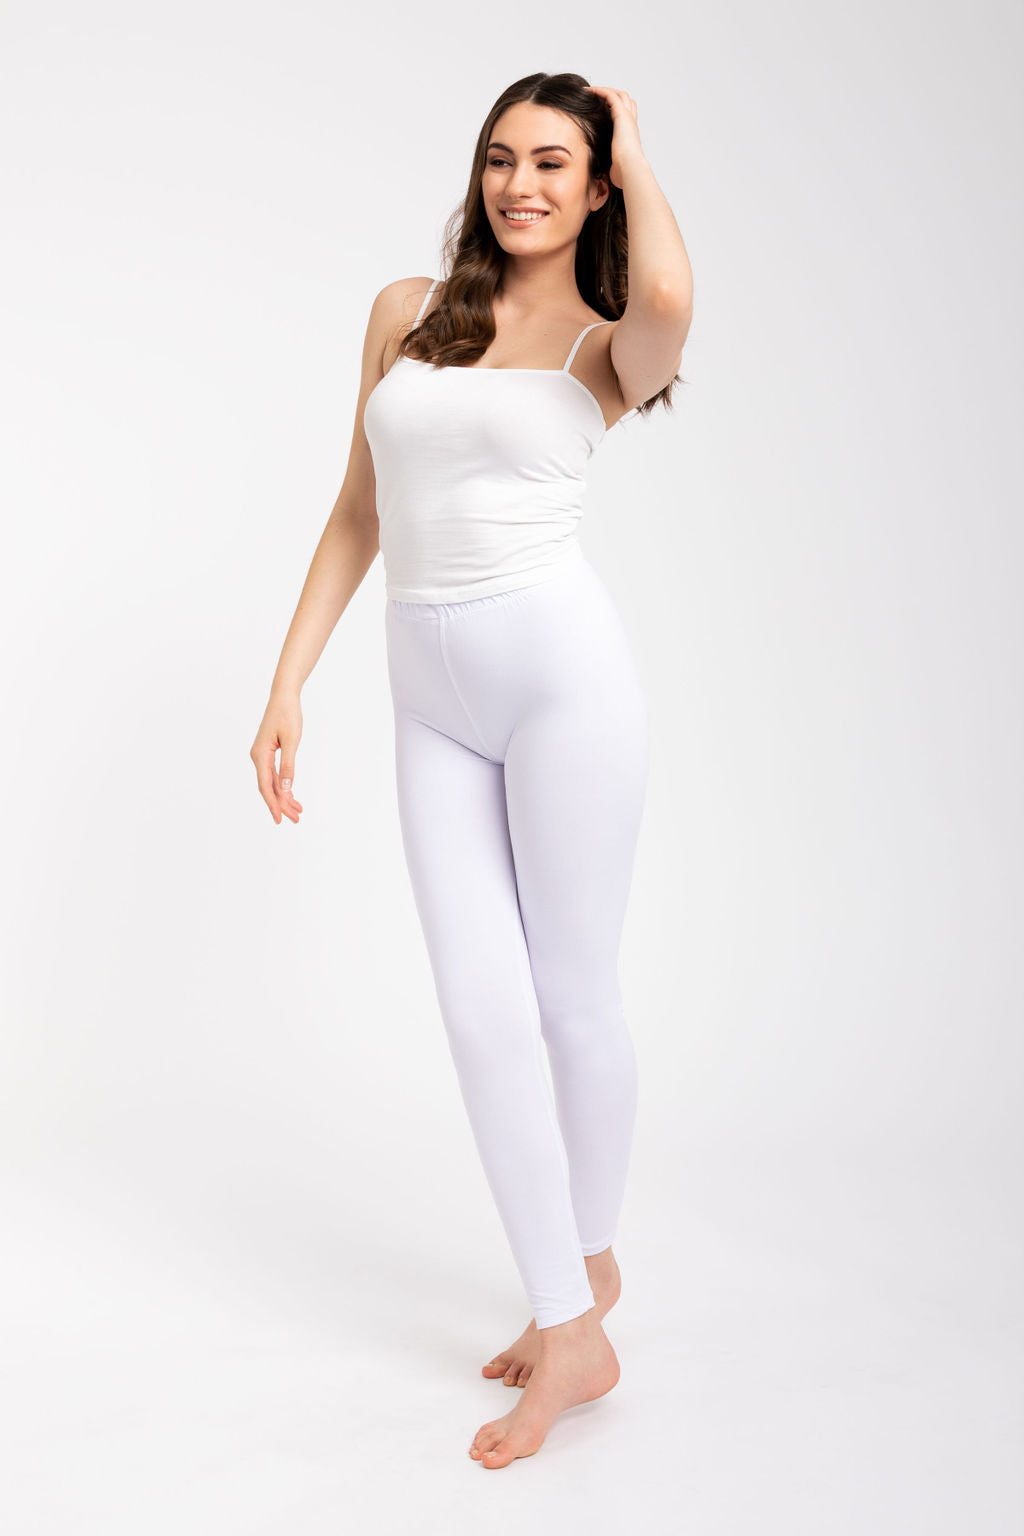 Women's Super Soft Midi-rise Printed Leggings - One Size Fits Most - White  Mark : Target